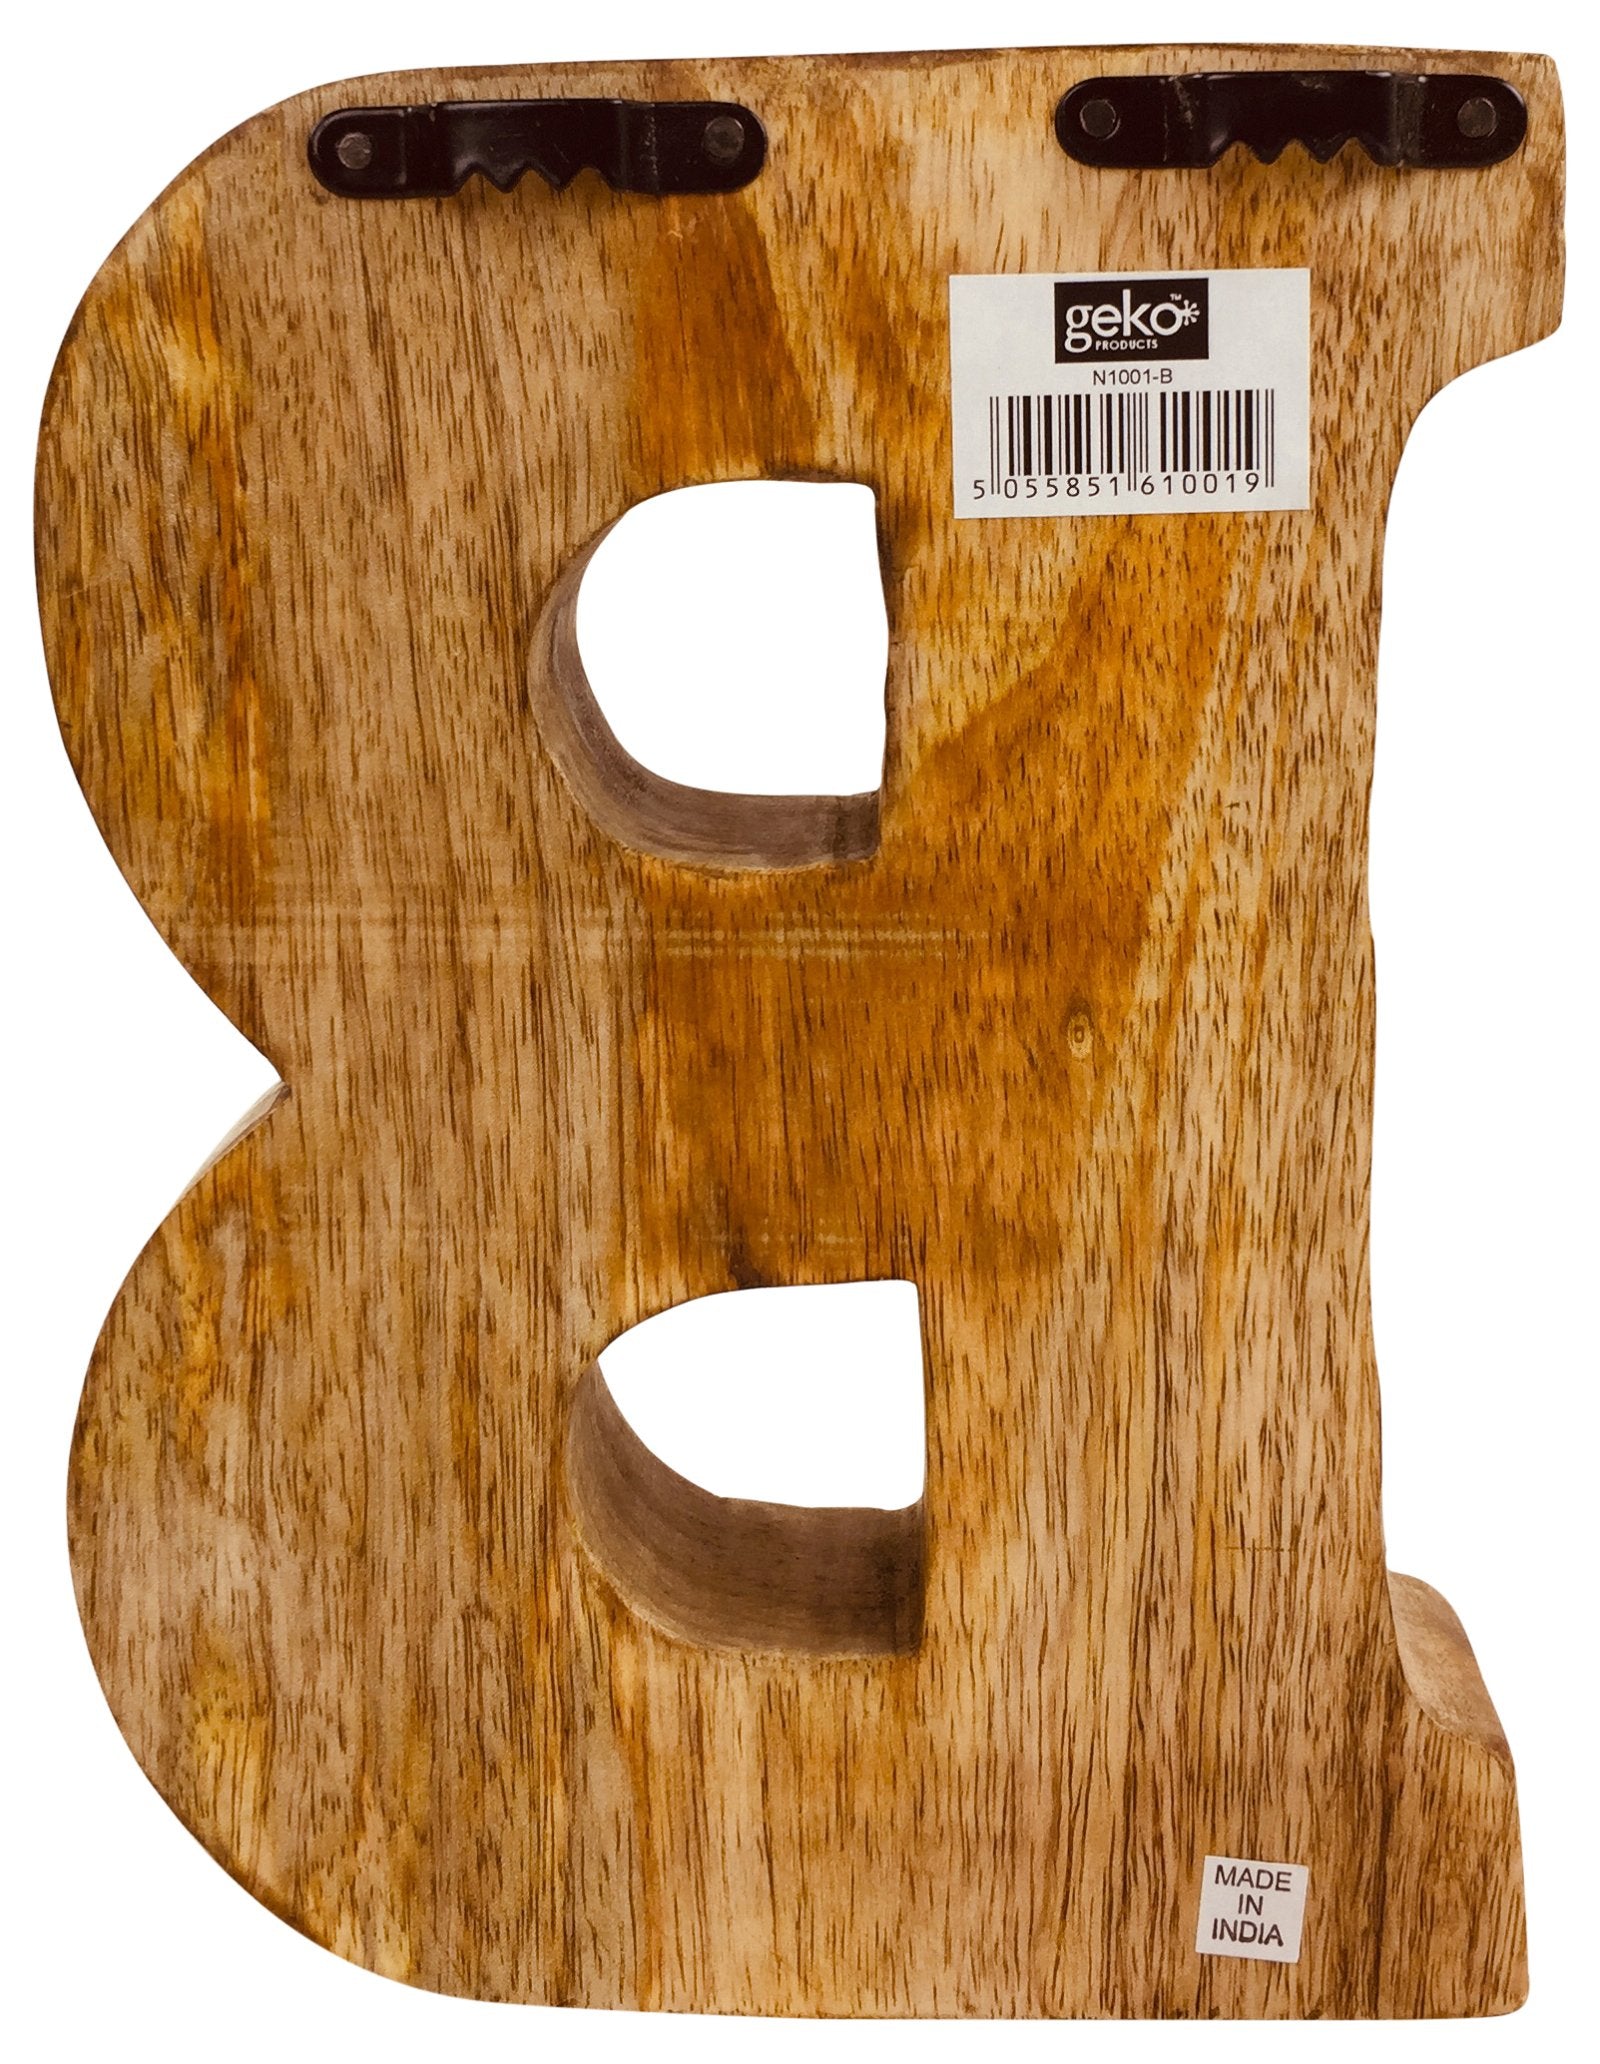 Hand Carved Wooden Geometric Letter B - Kaftan direct